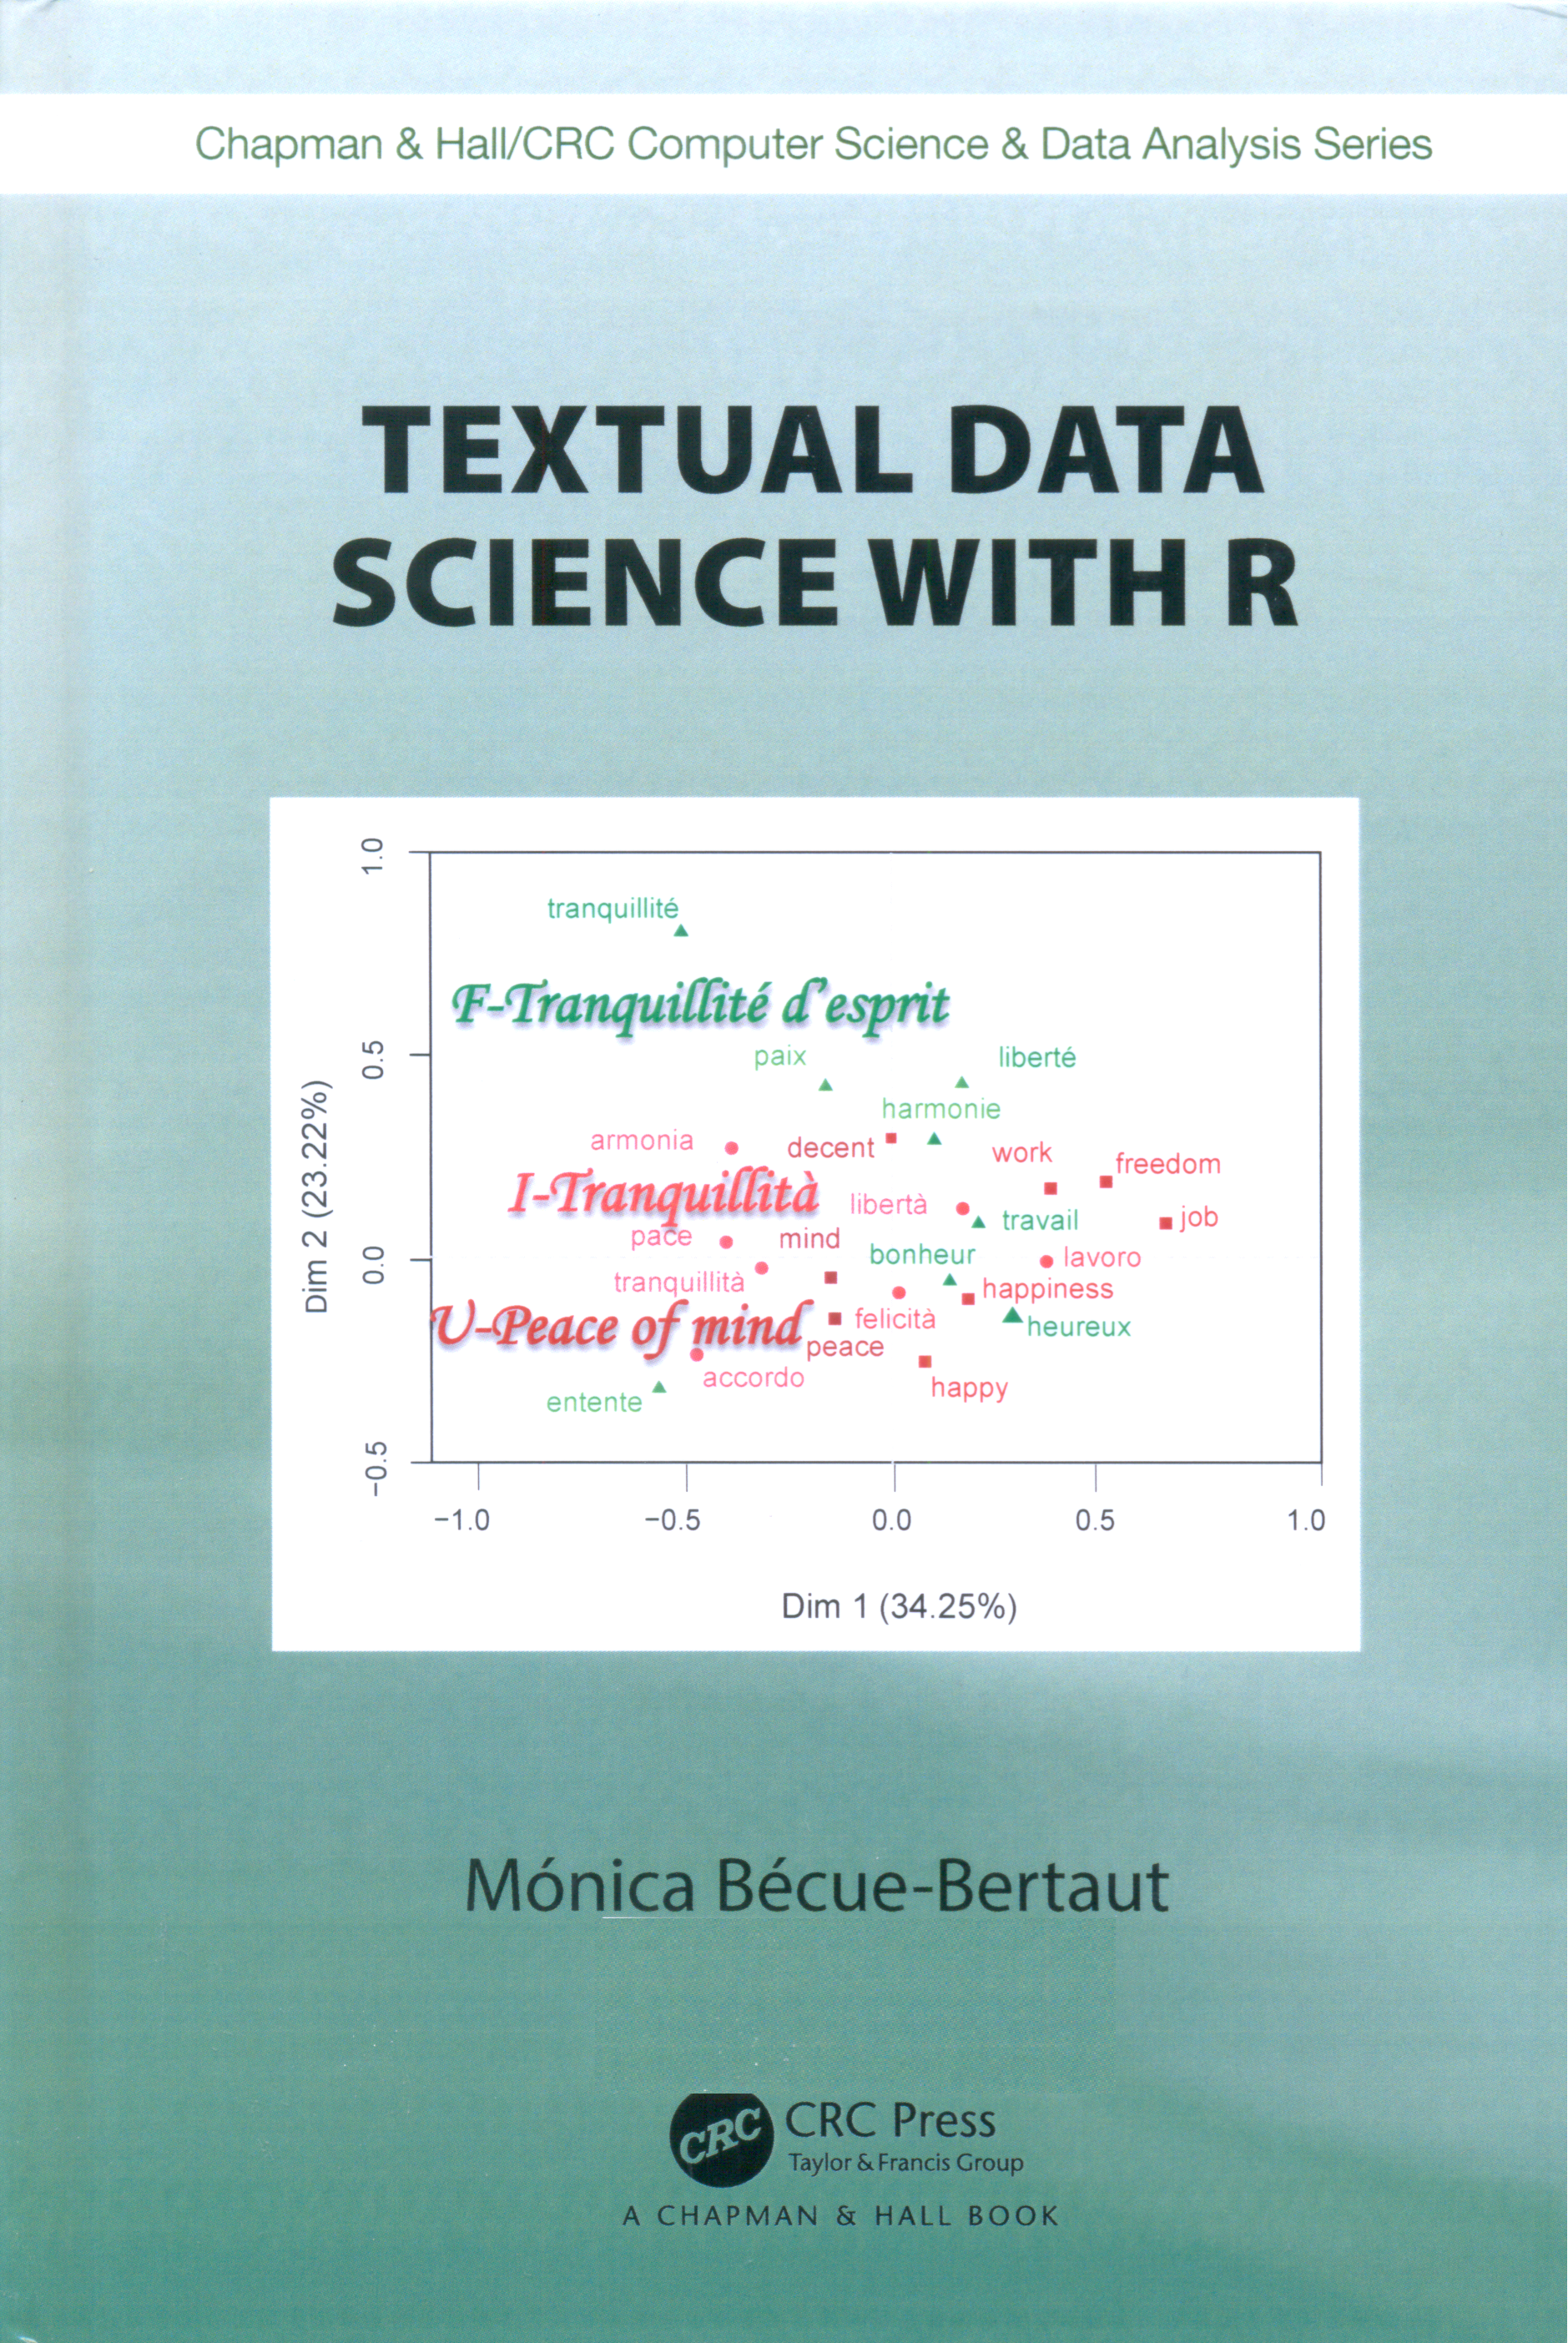 Textual data science using R / Monica Bécue-Bertaut